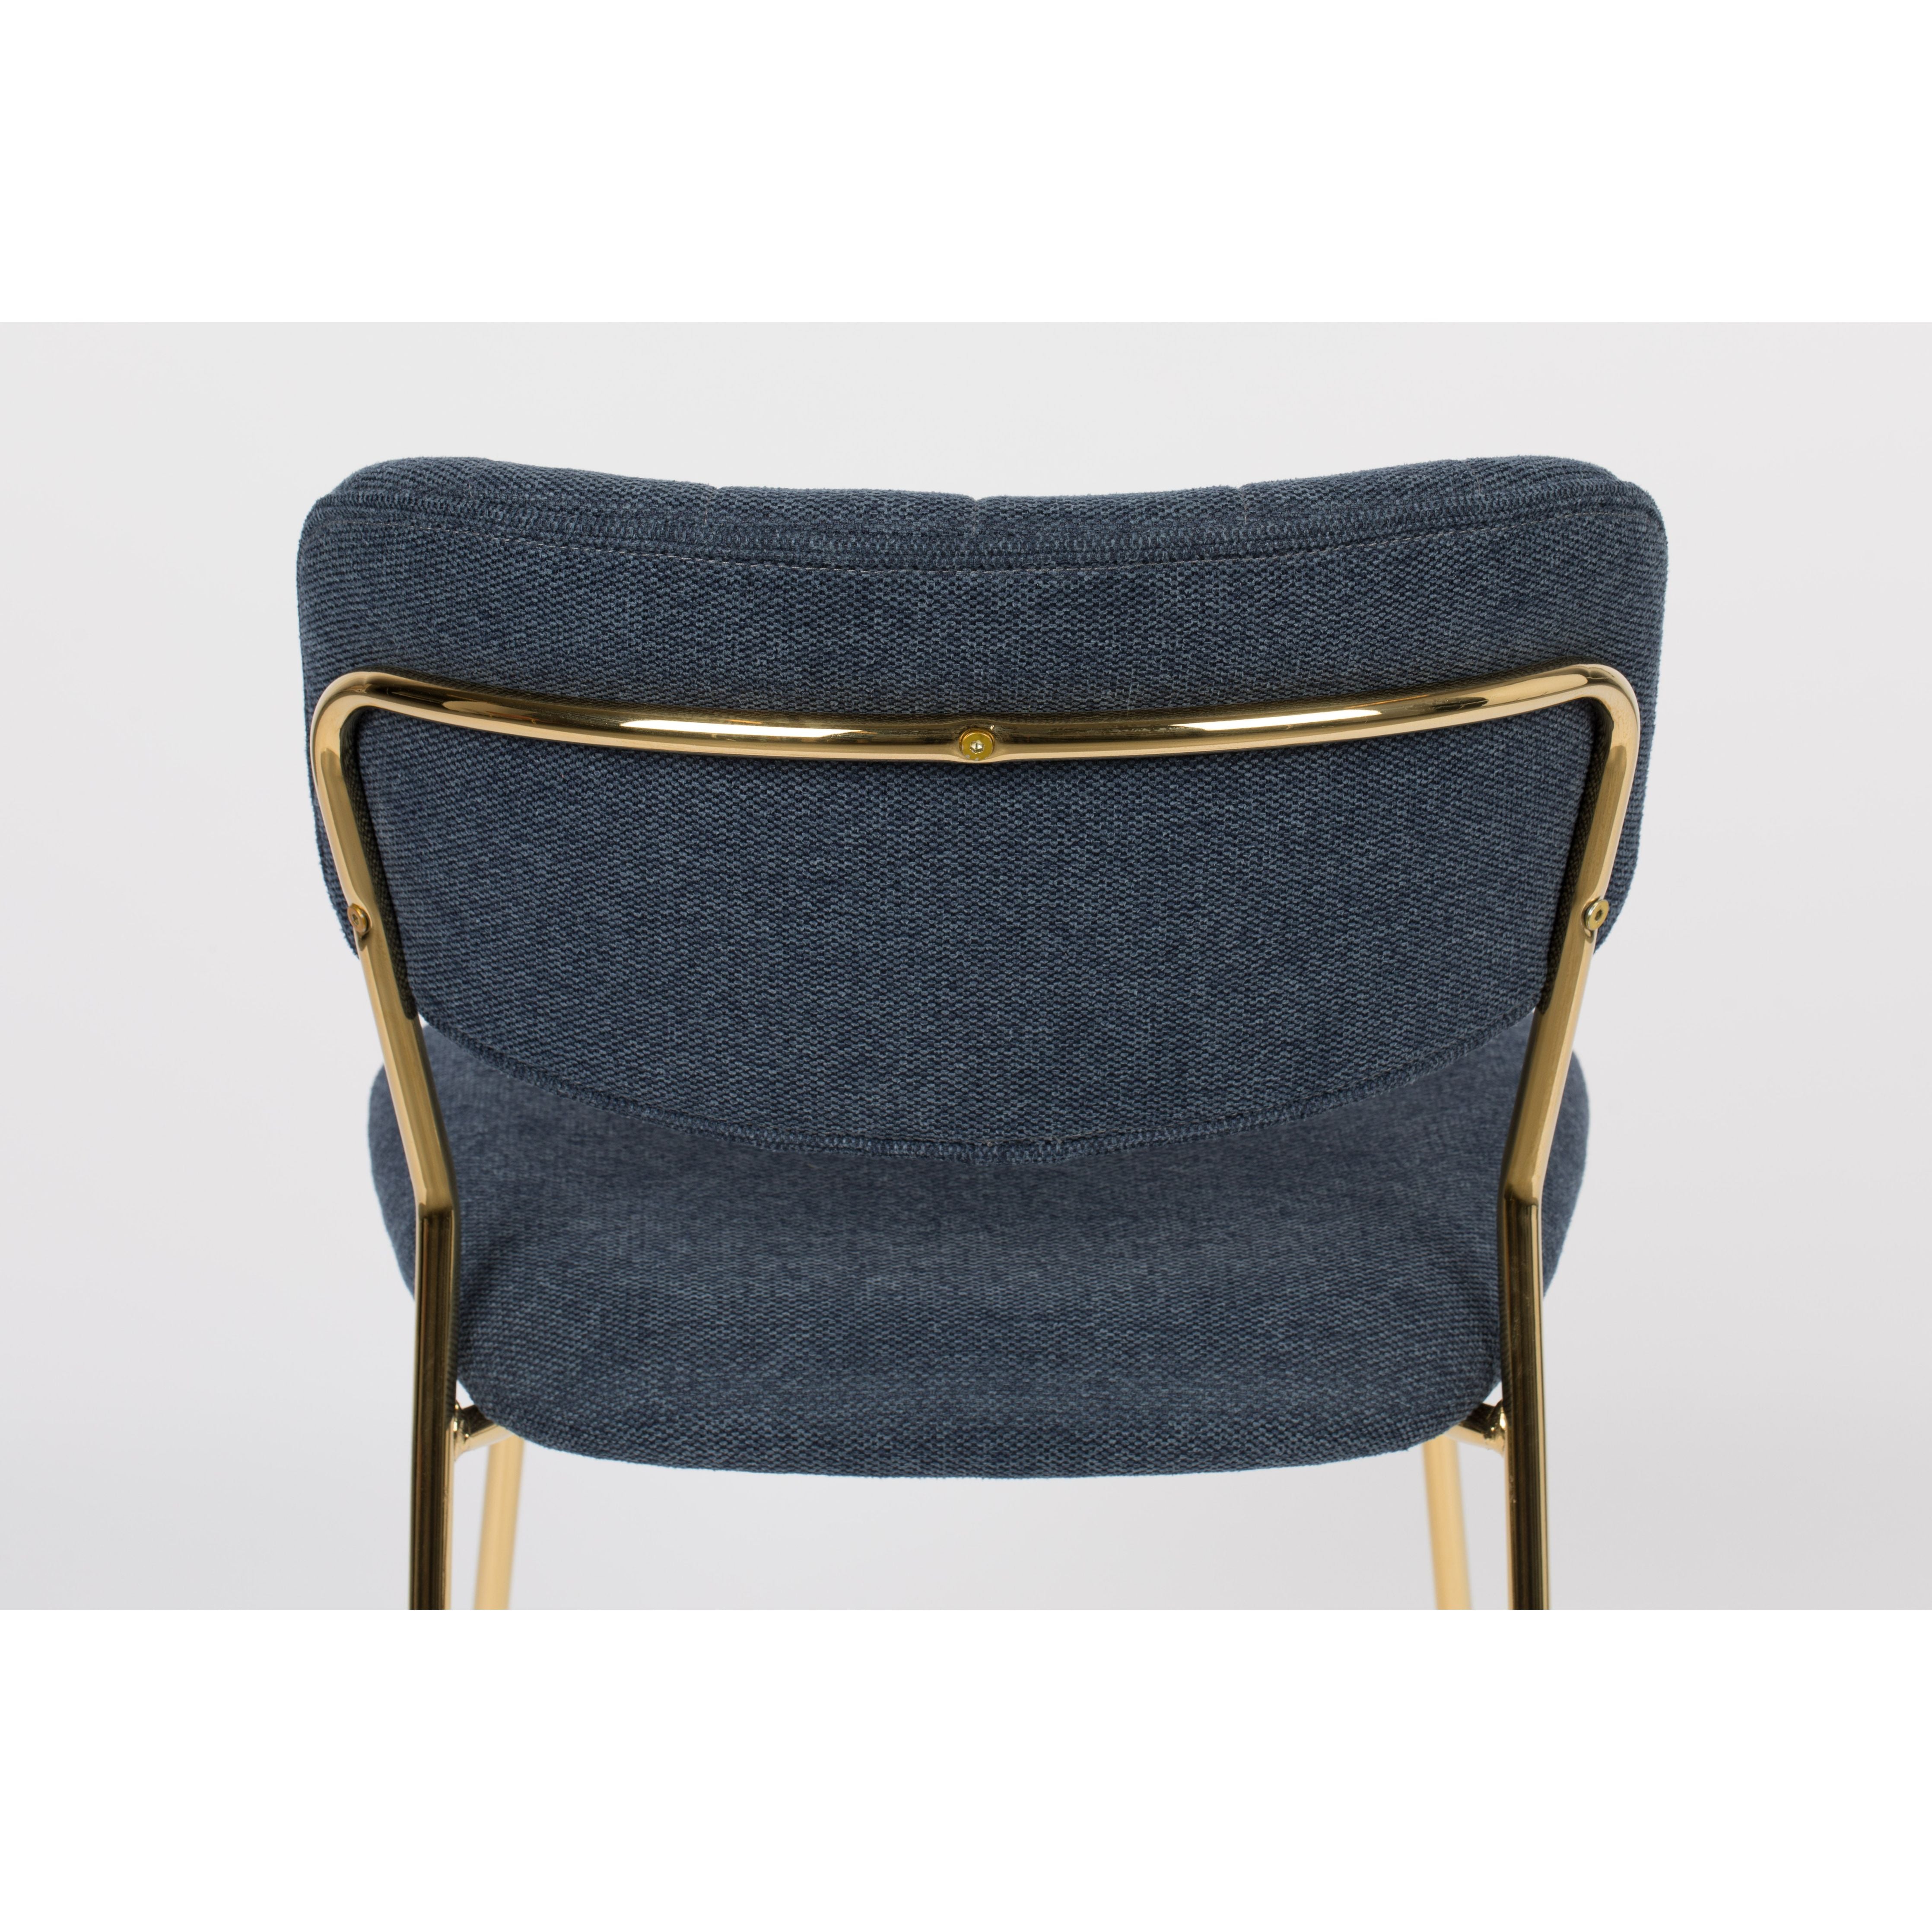 Chair jolien gold/dark blue | 2 pieces